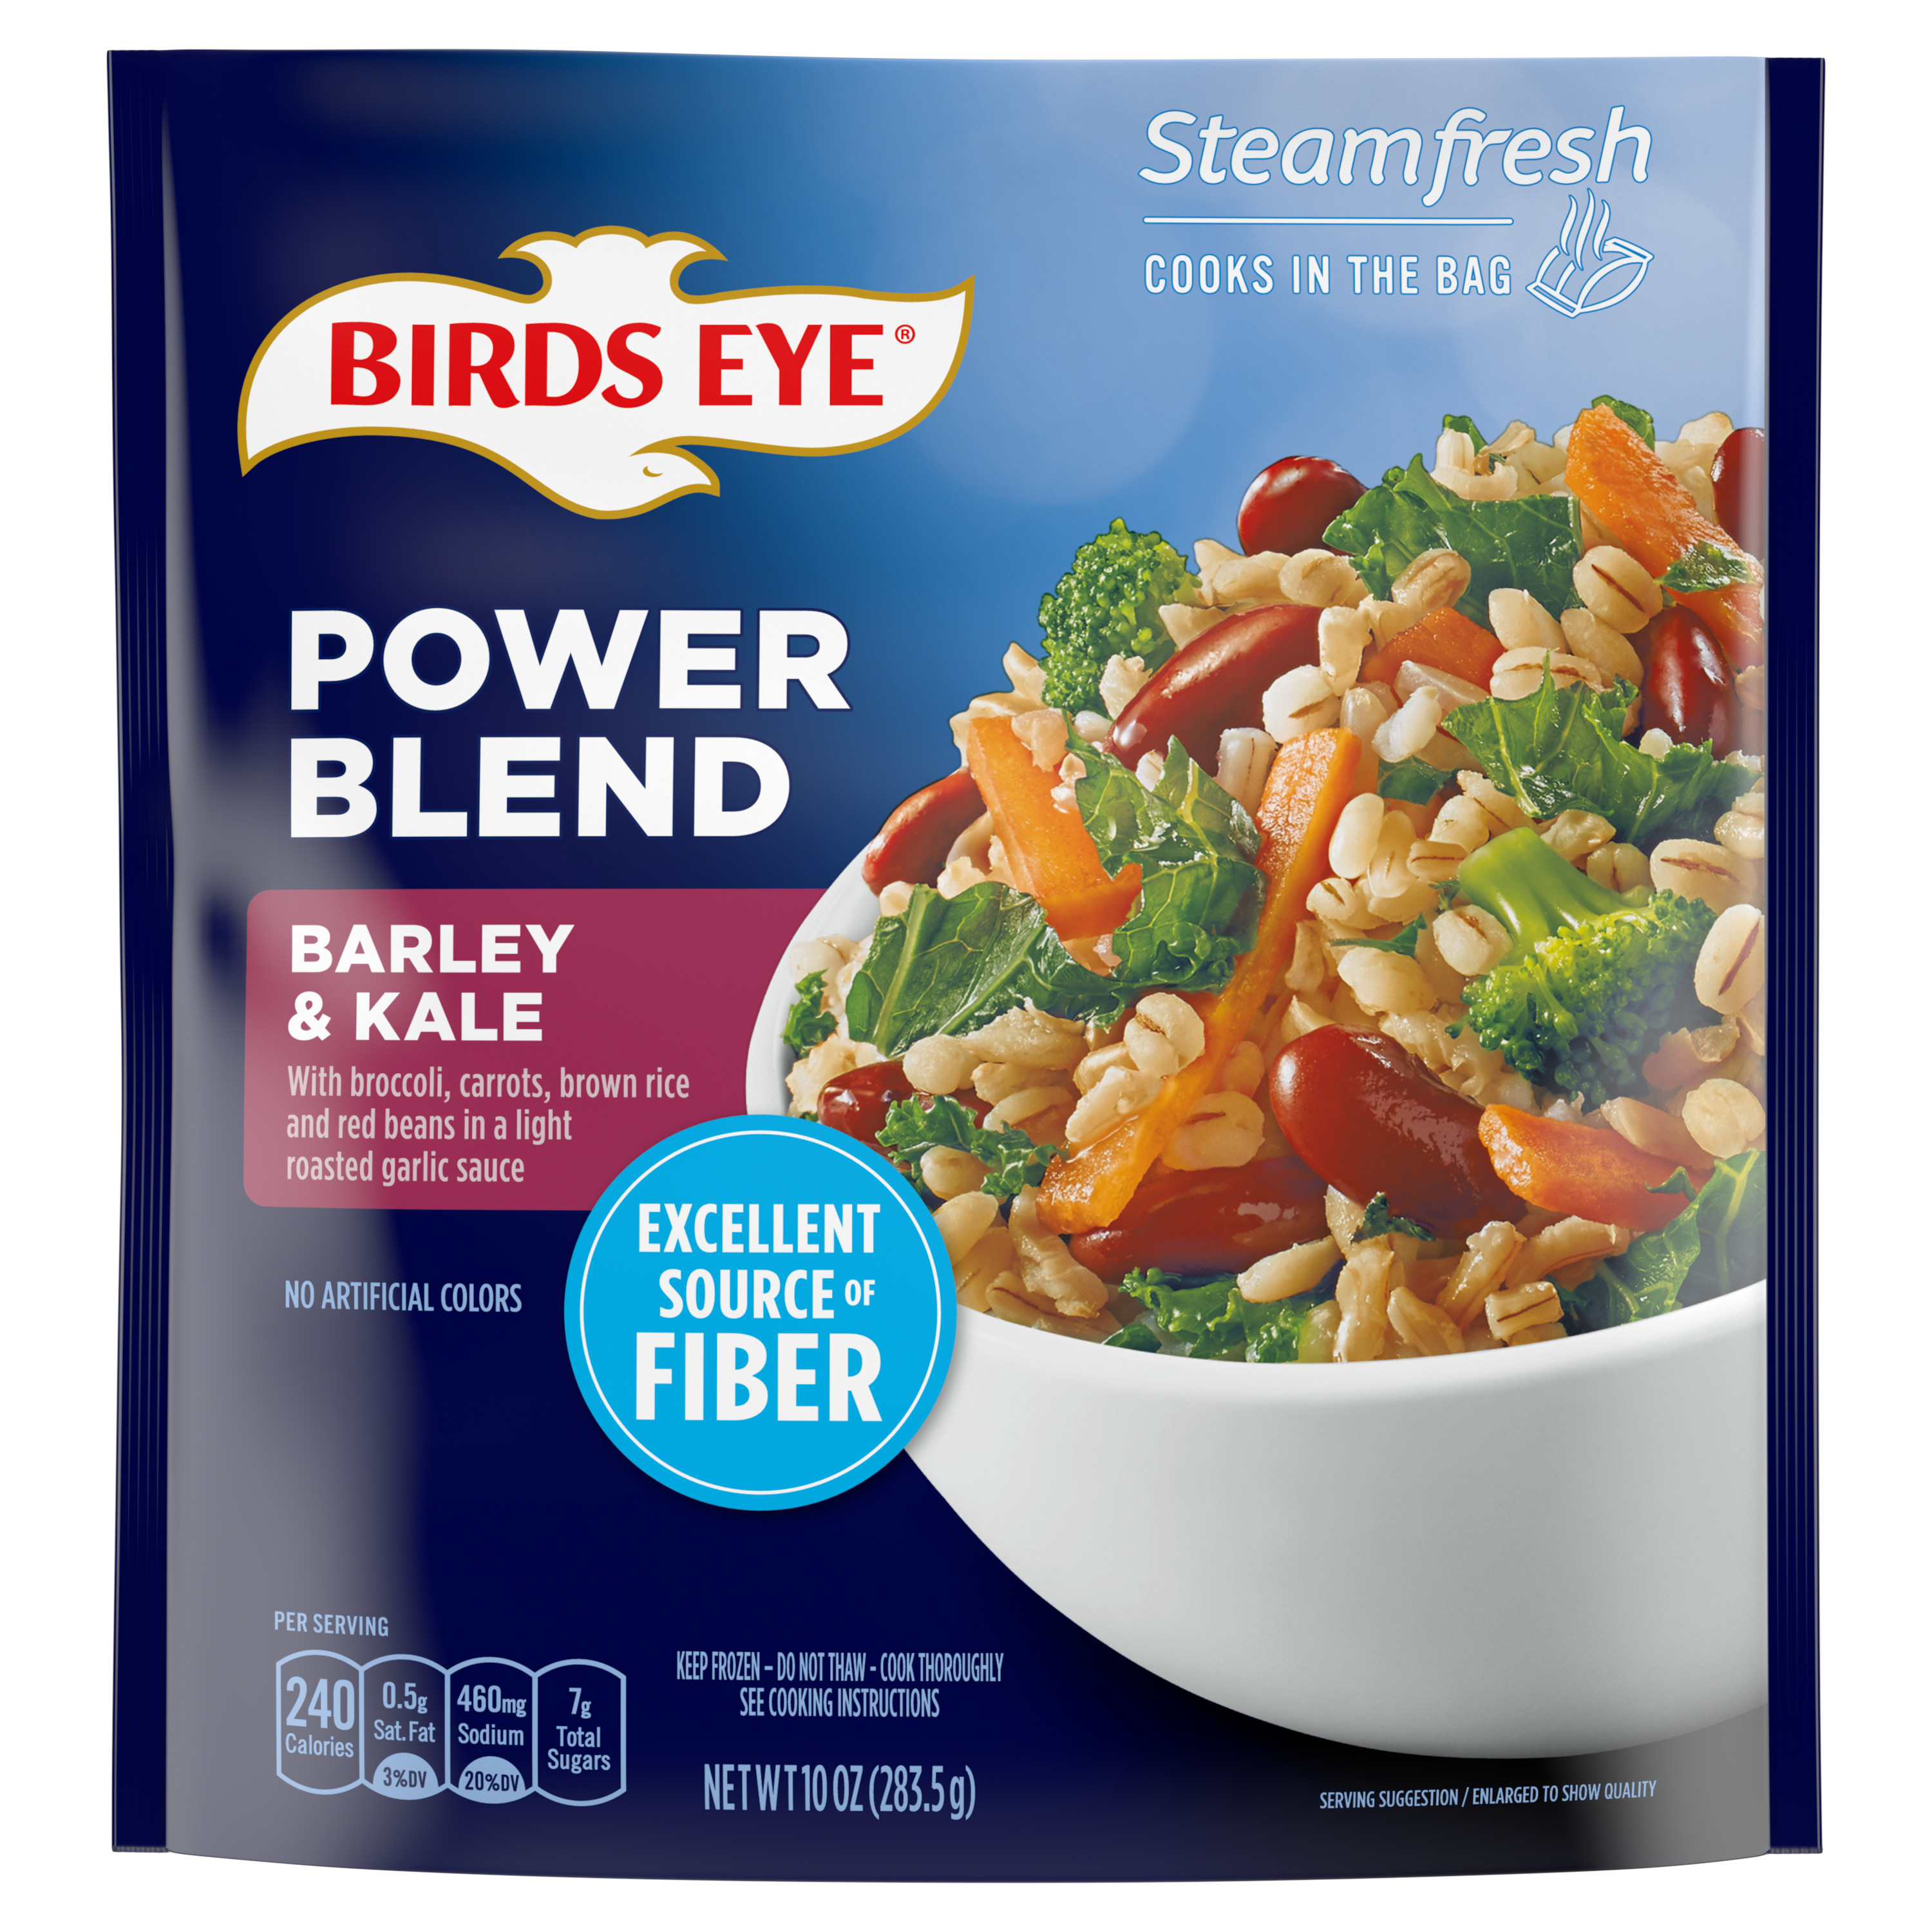 Birds Eye Steamfresh Superfood Blends Barley & Kale